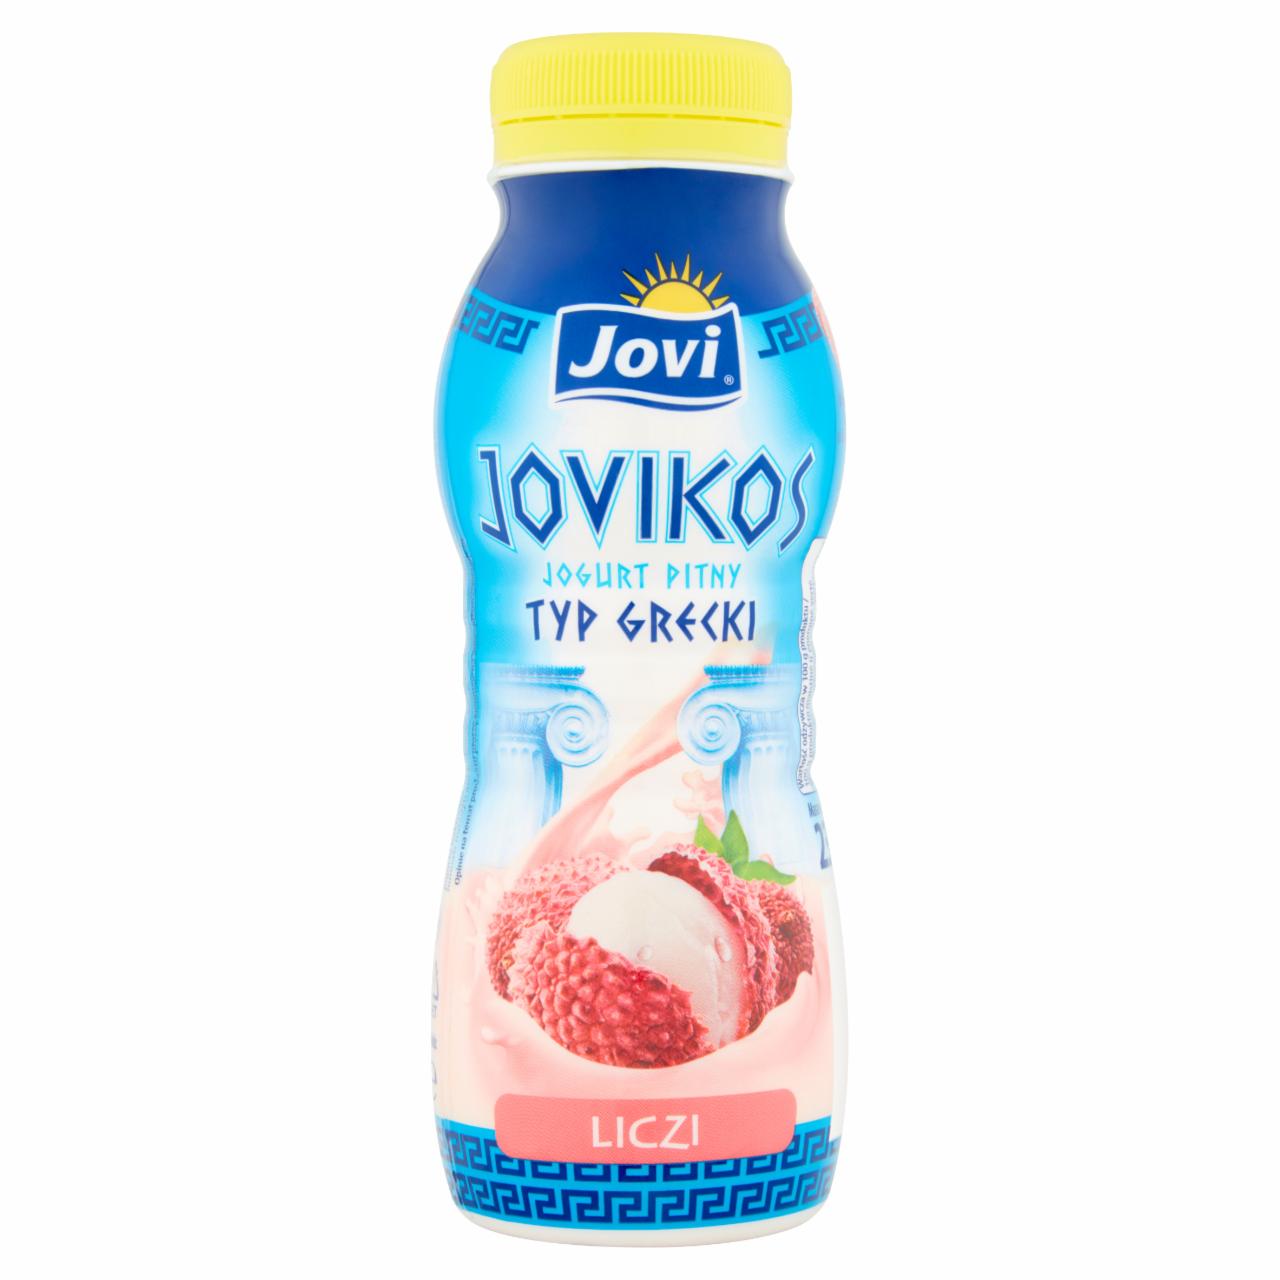 Zdjęcia - Jovi Jovikos Jogurt pitny typ grecki liczi 230 g